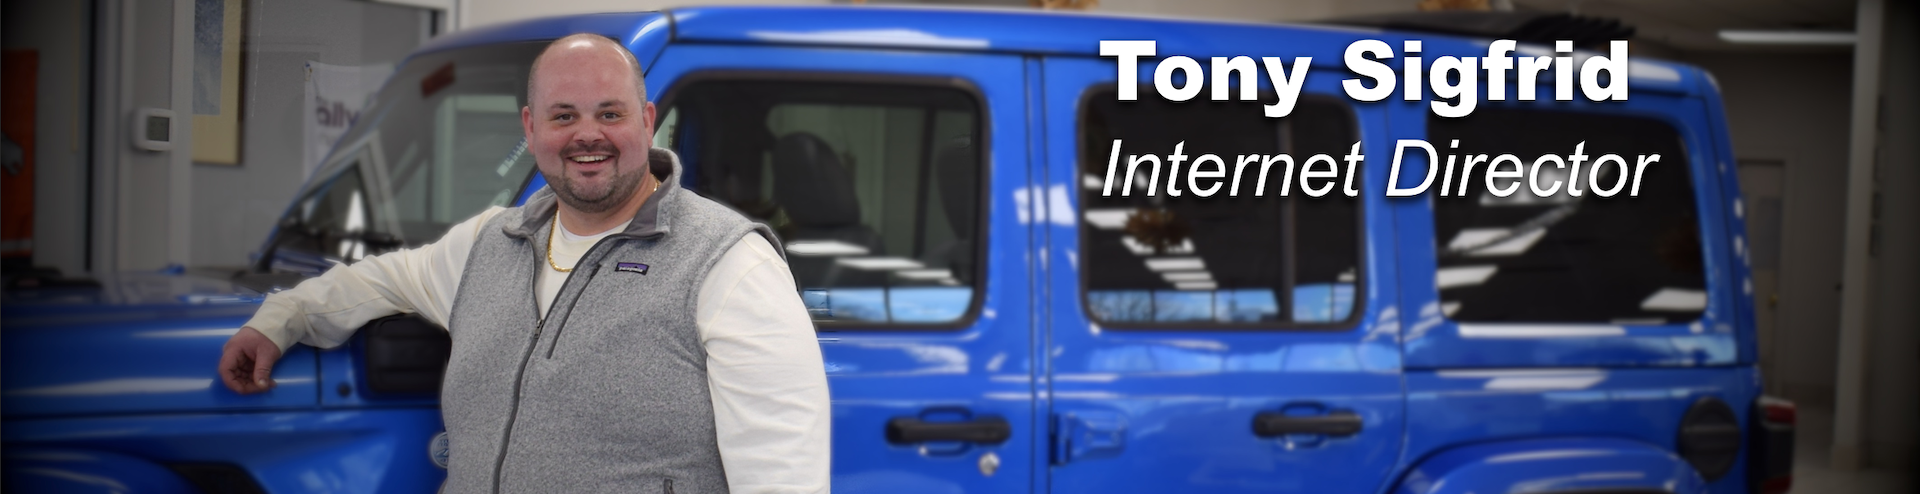 tony sigfrid internet director prestige chrysler dodge jeep ram